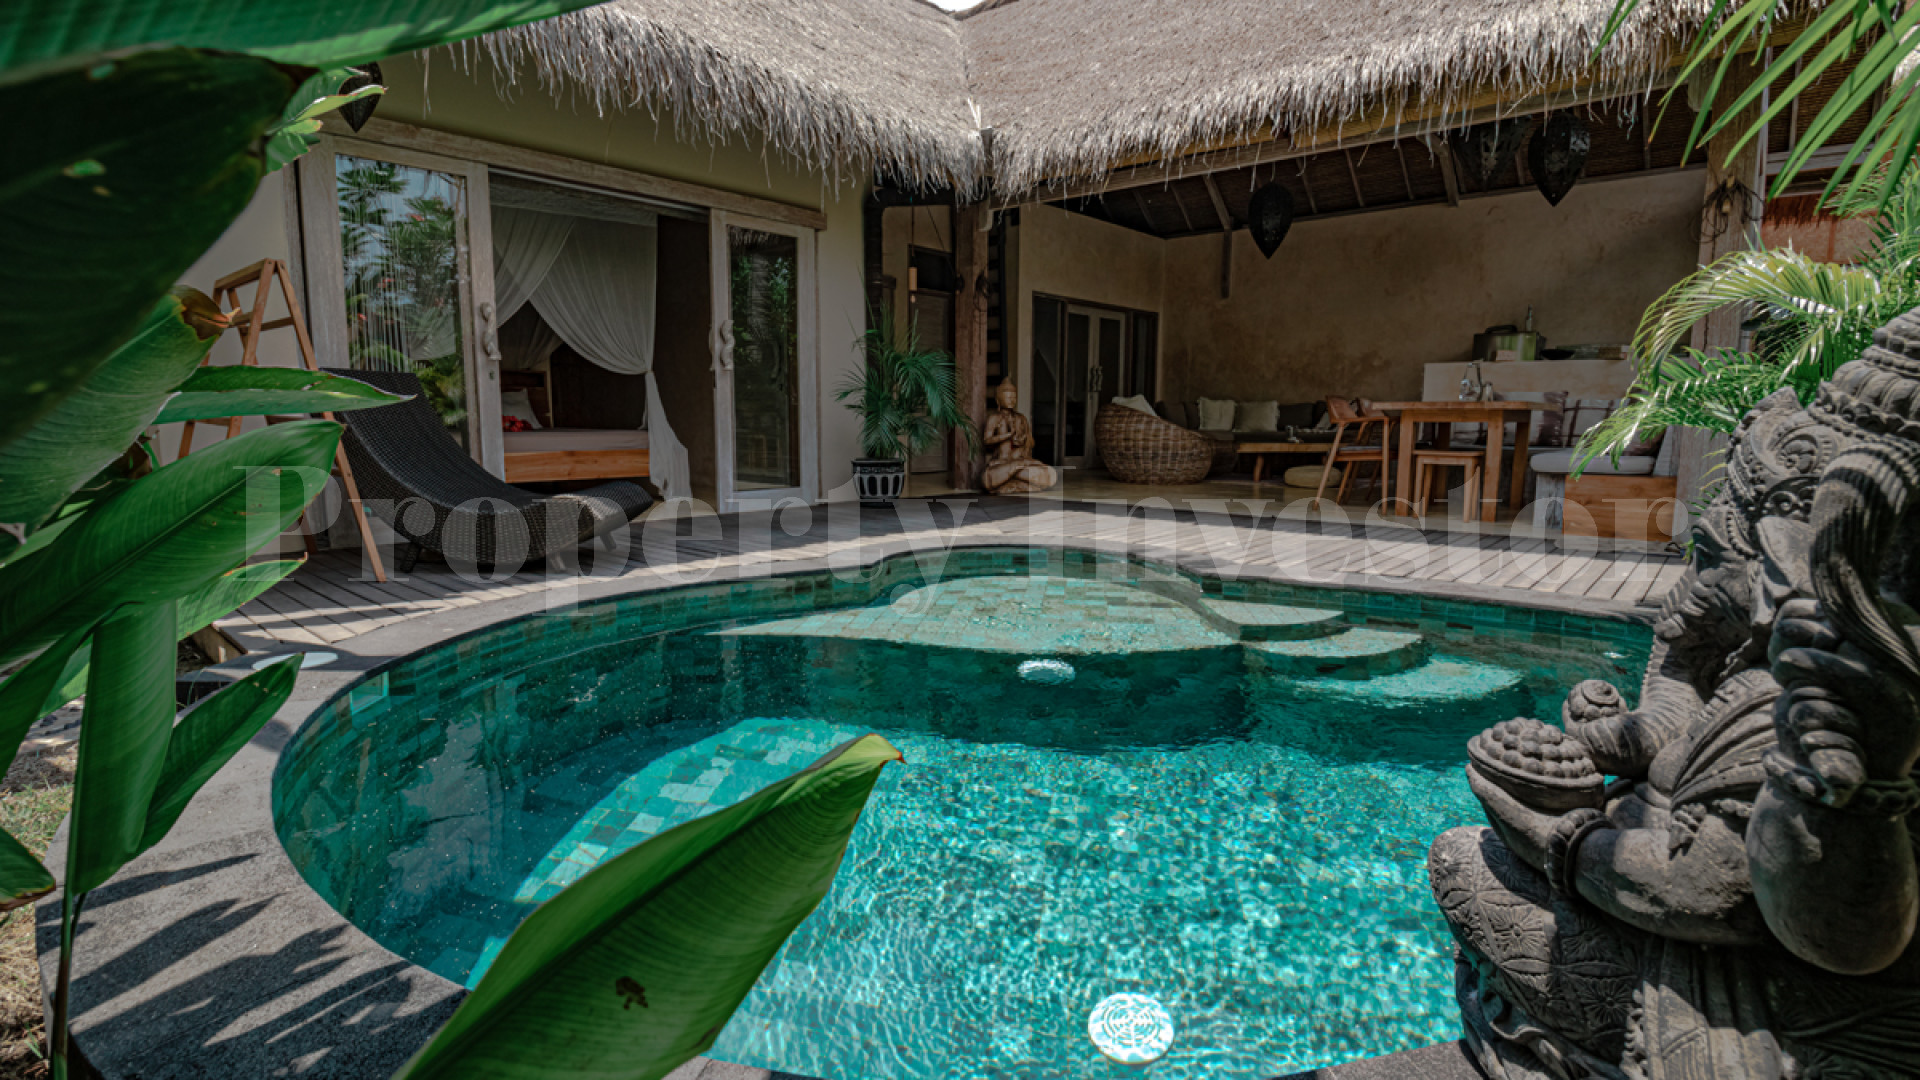 Unique Boutique Island Hotel with 4 Private Villas for Sale on Gili Air, Indonesia